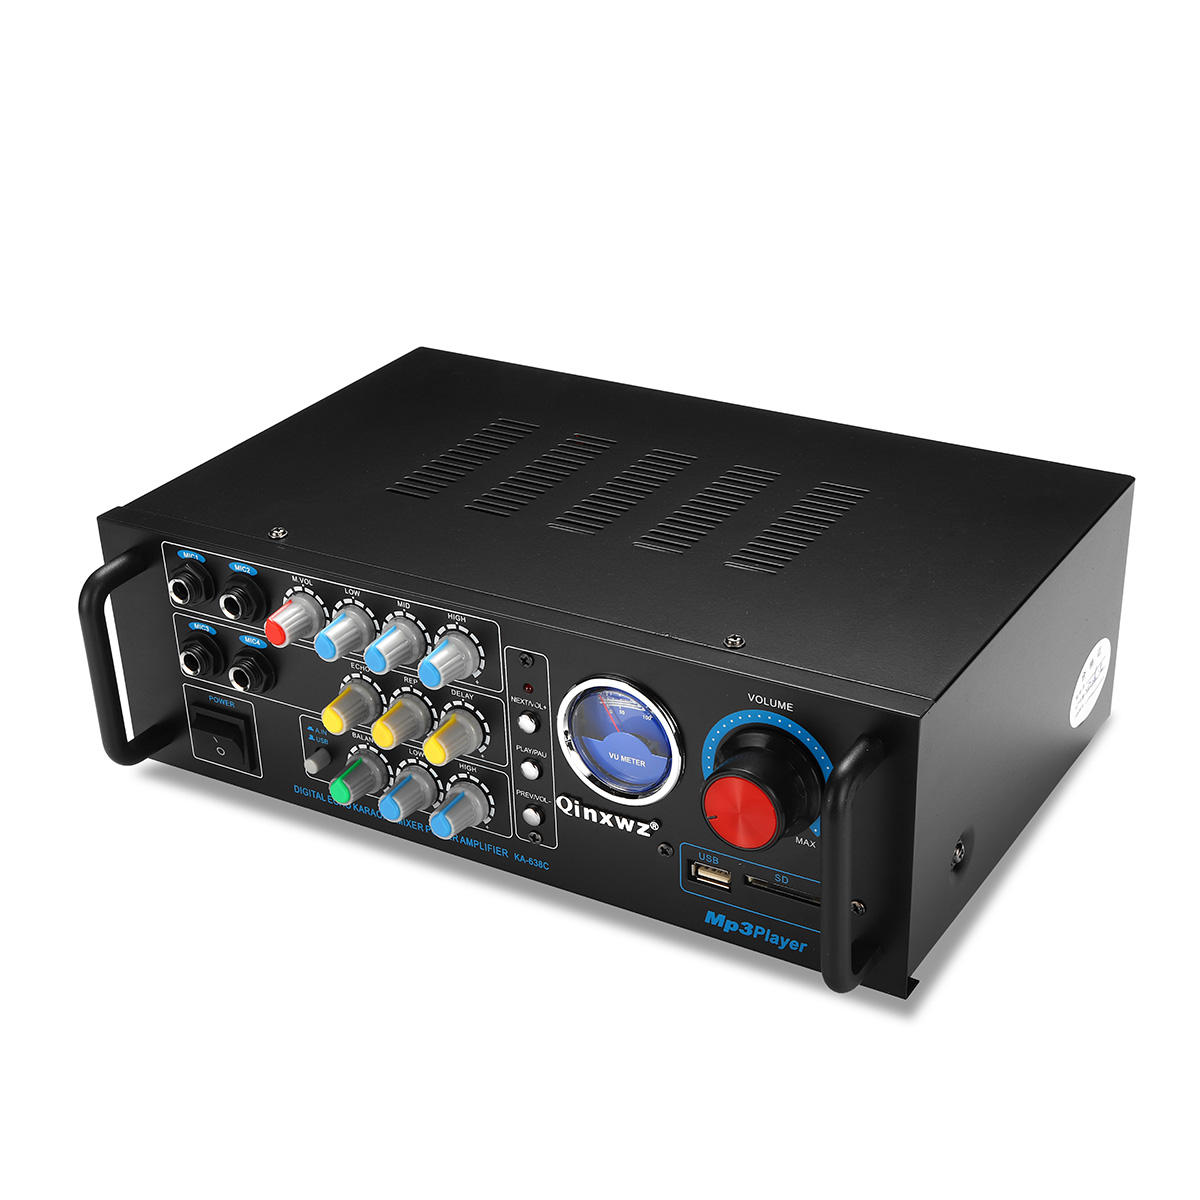 

Qinxwz KA-638C 2CH 80W UV Meter Amplifier Karaoke Mixer Support Memory Card USB Microphone